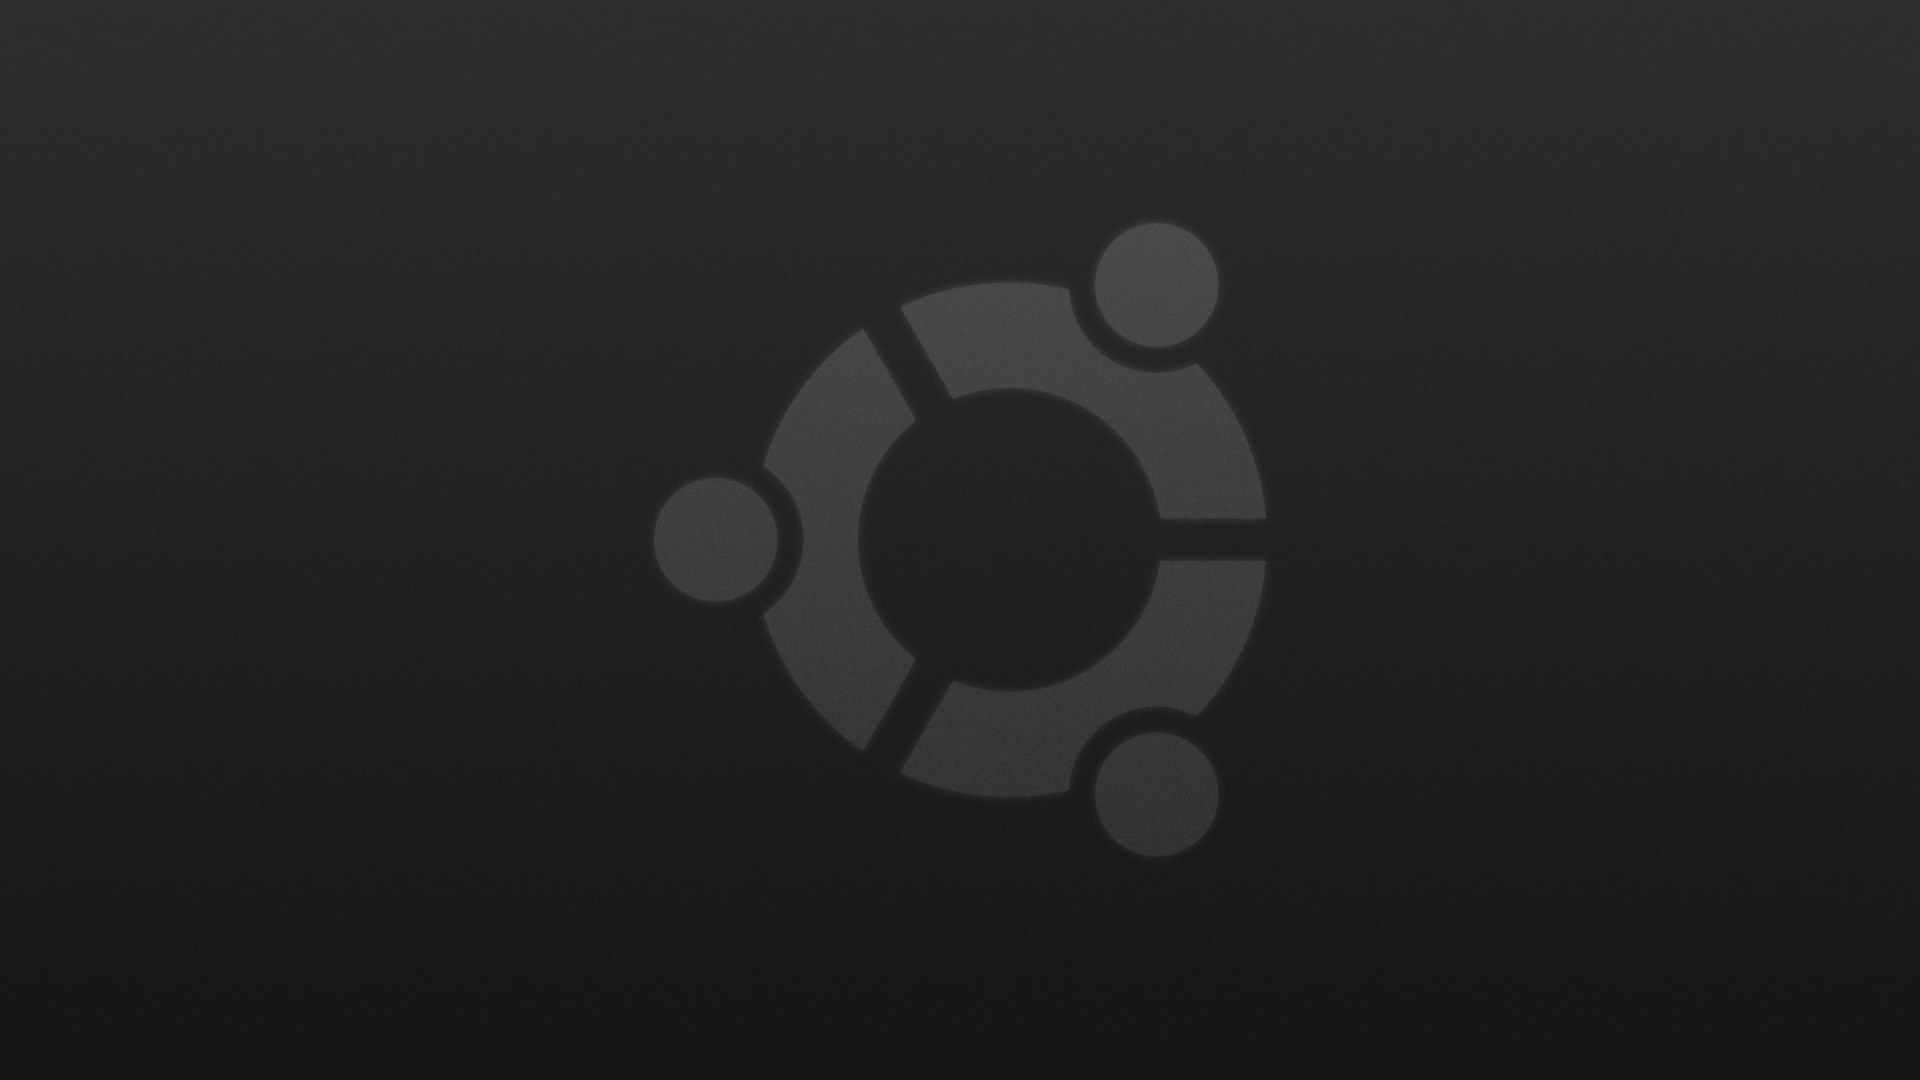 Ubuntu Dark Simple Wallpaper By Defectivedre Customization